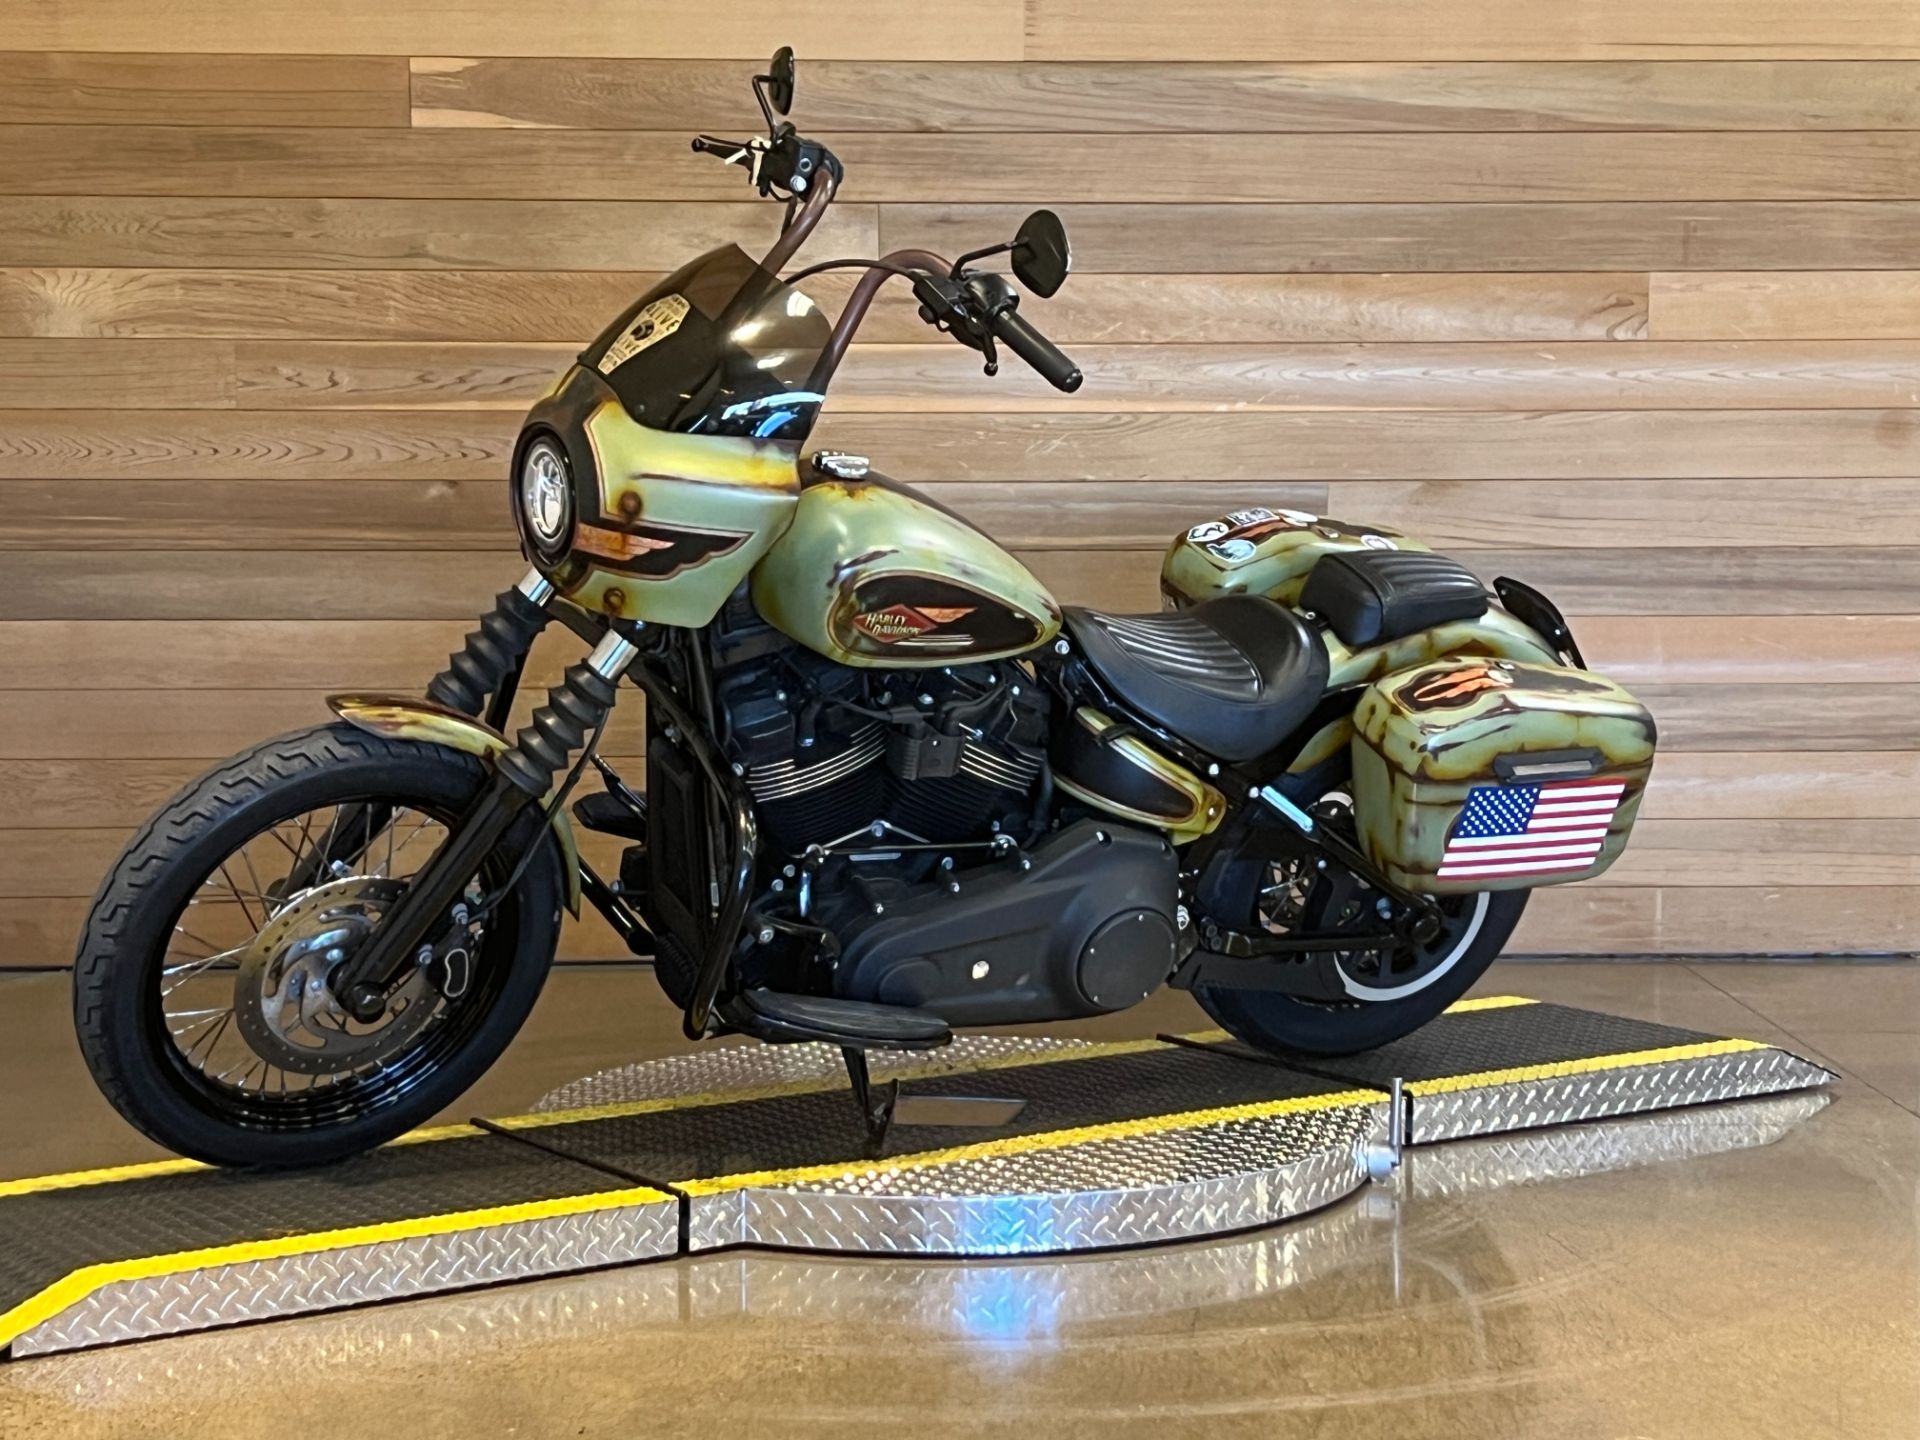 2020 Harley-Davidson Street Bob® in Salem, Oregon - Photo 4